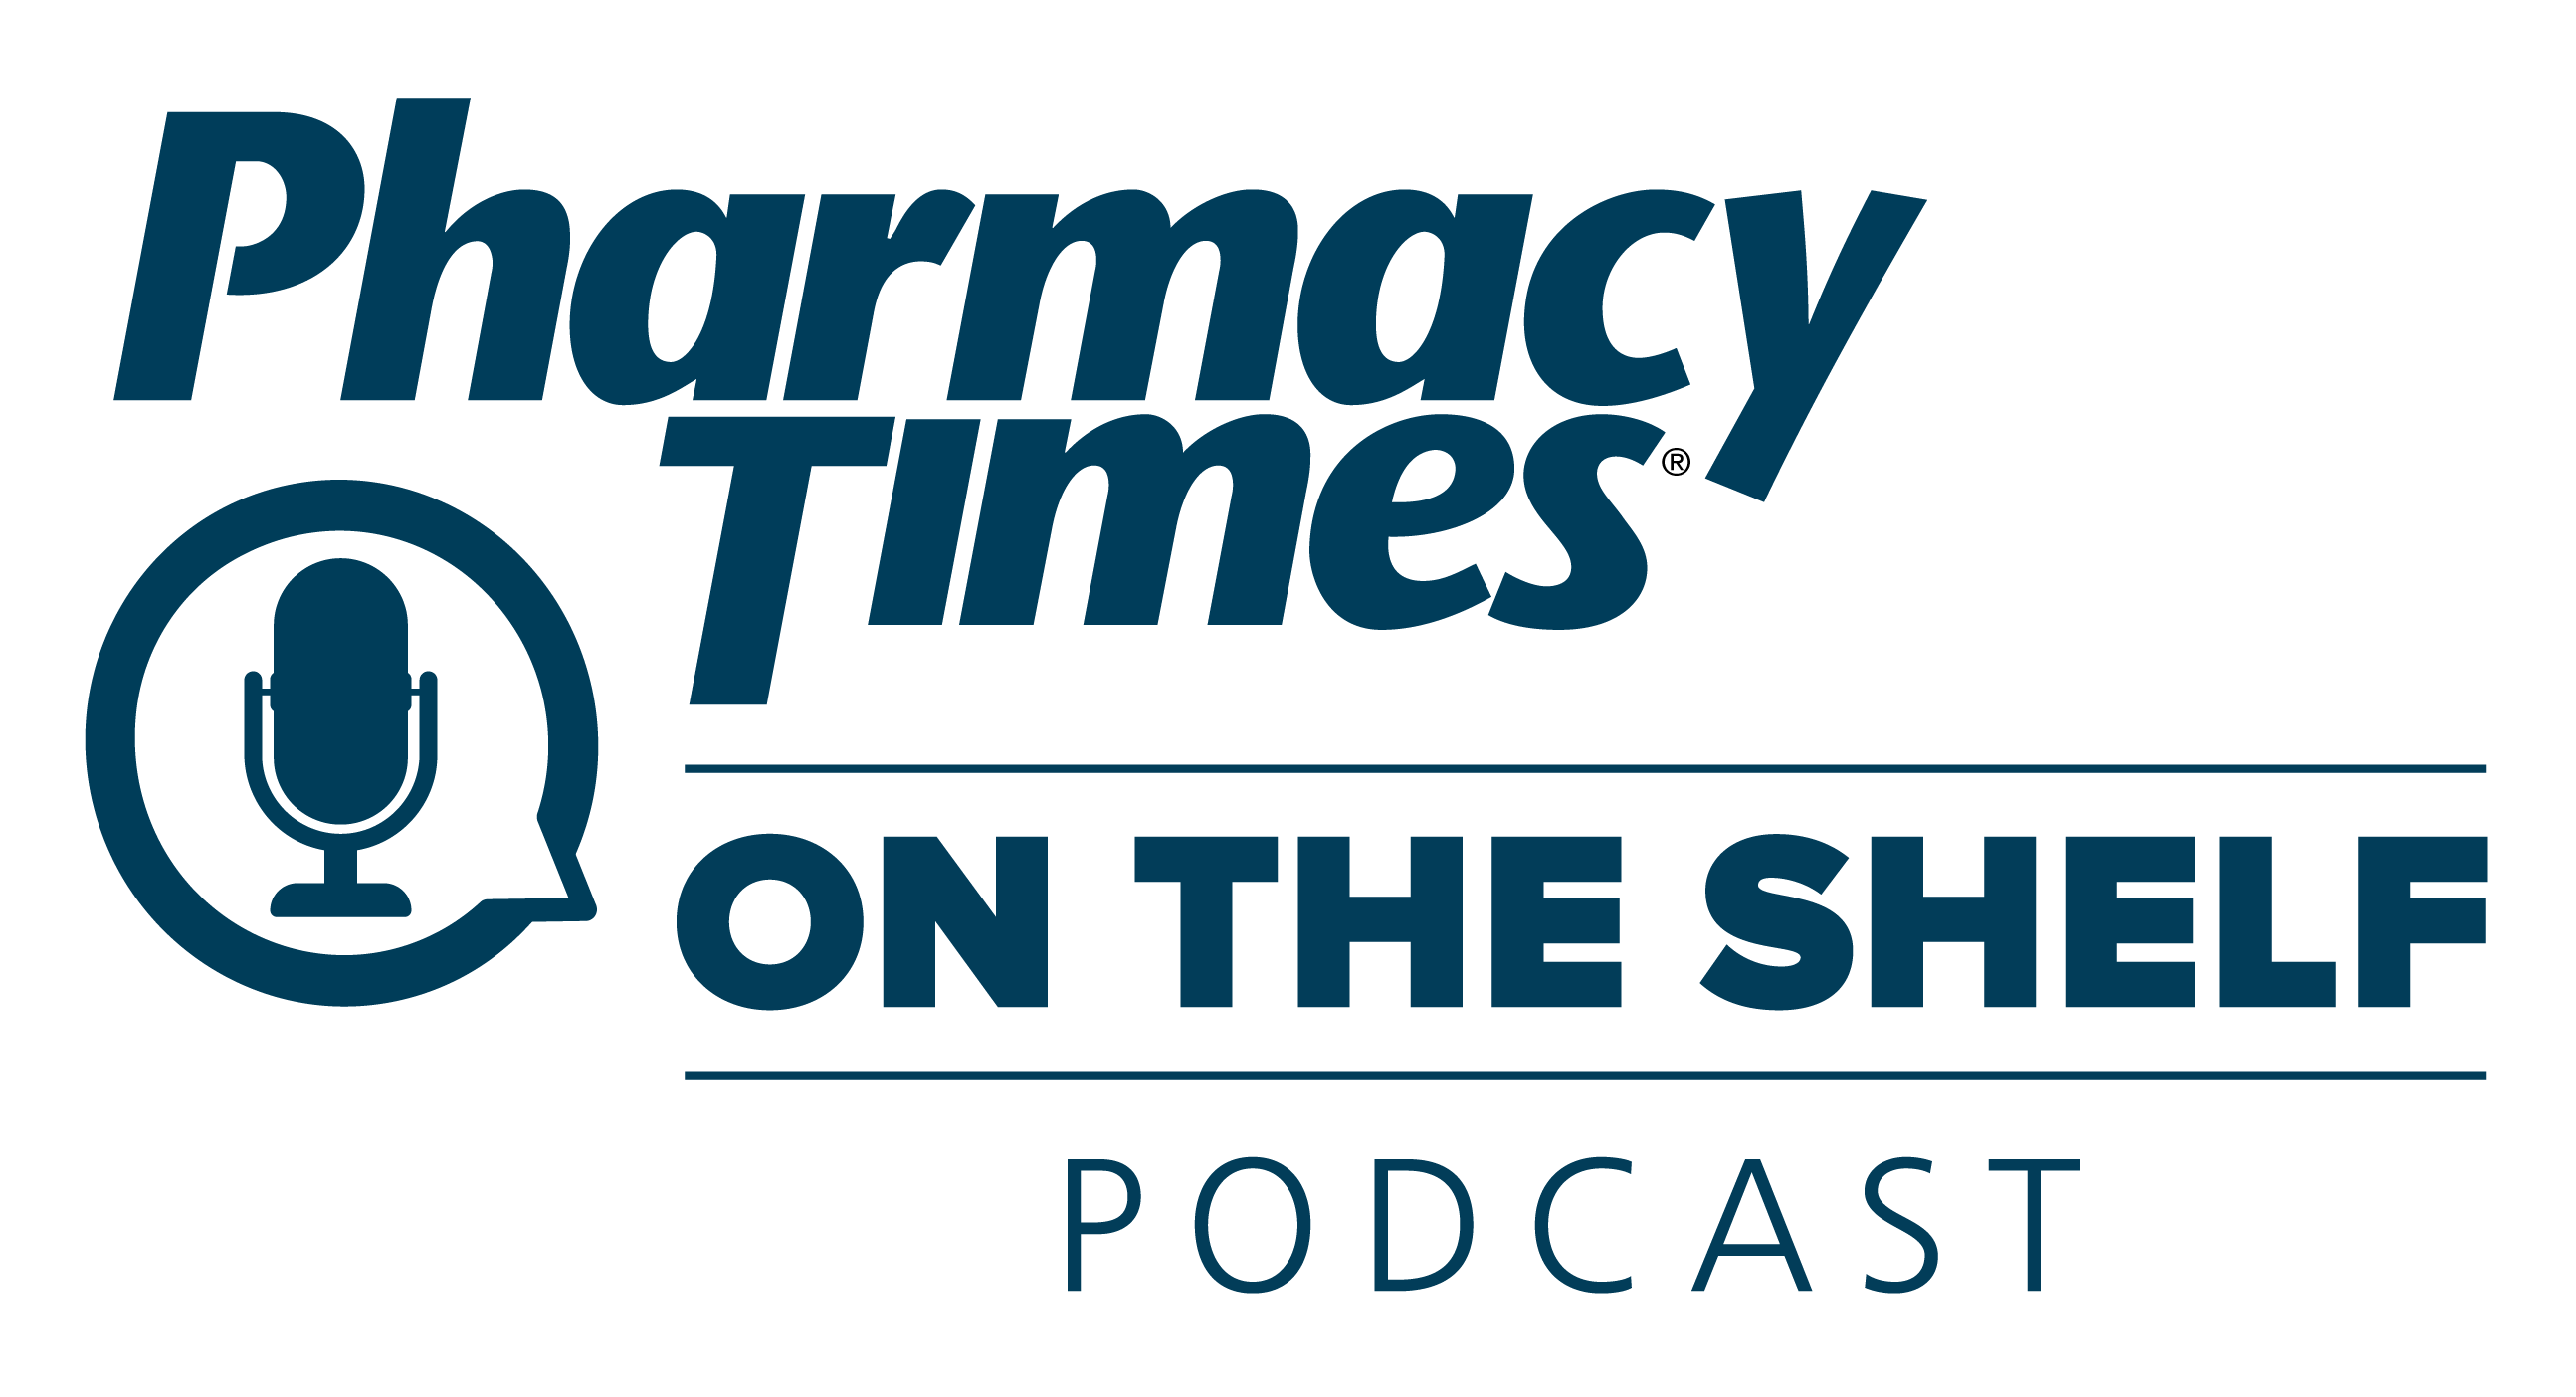 Pharmacy Focus Podcast: New Series - On The Shelf